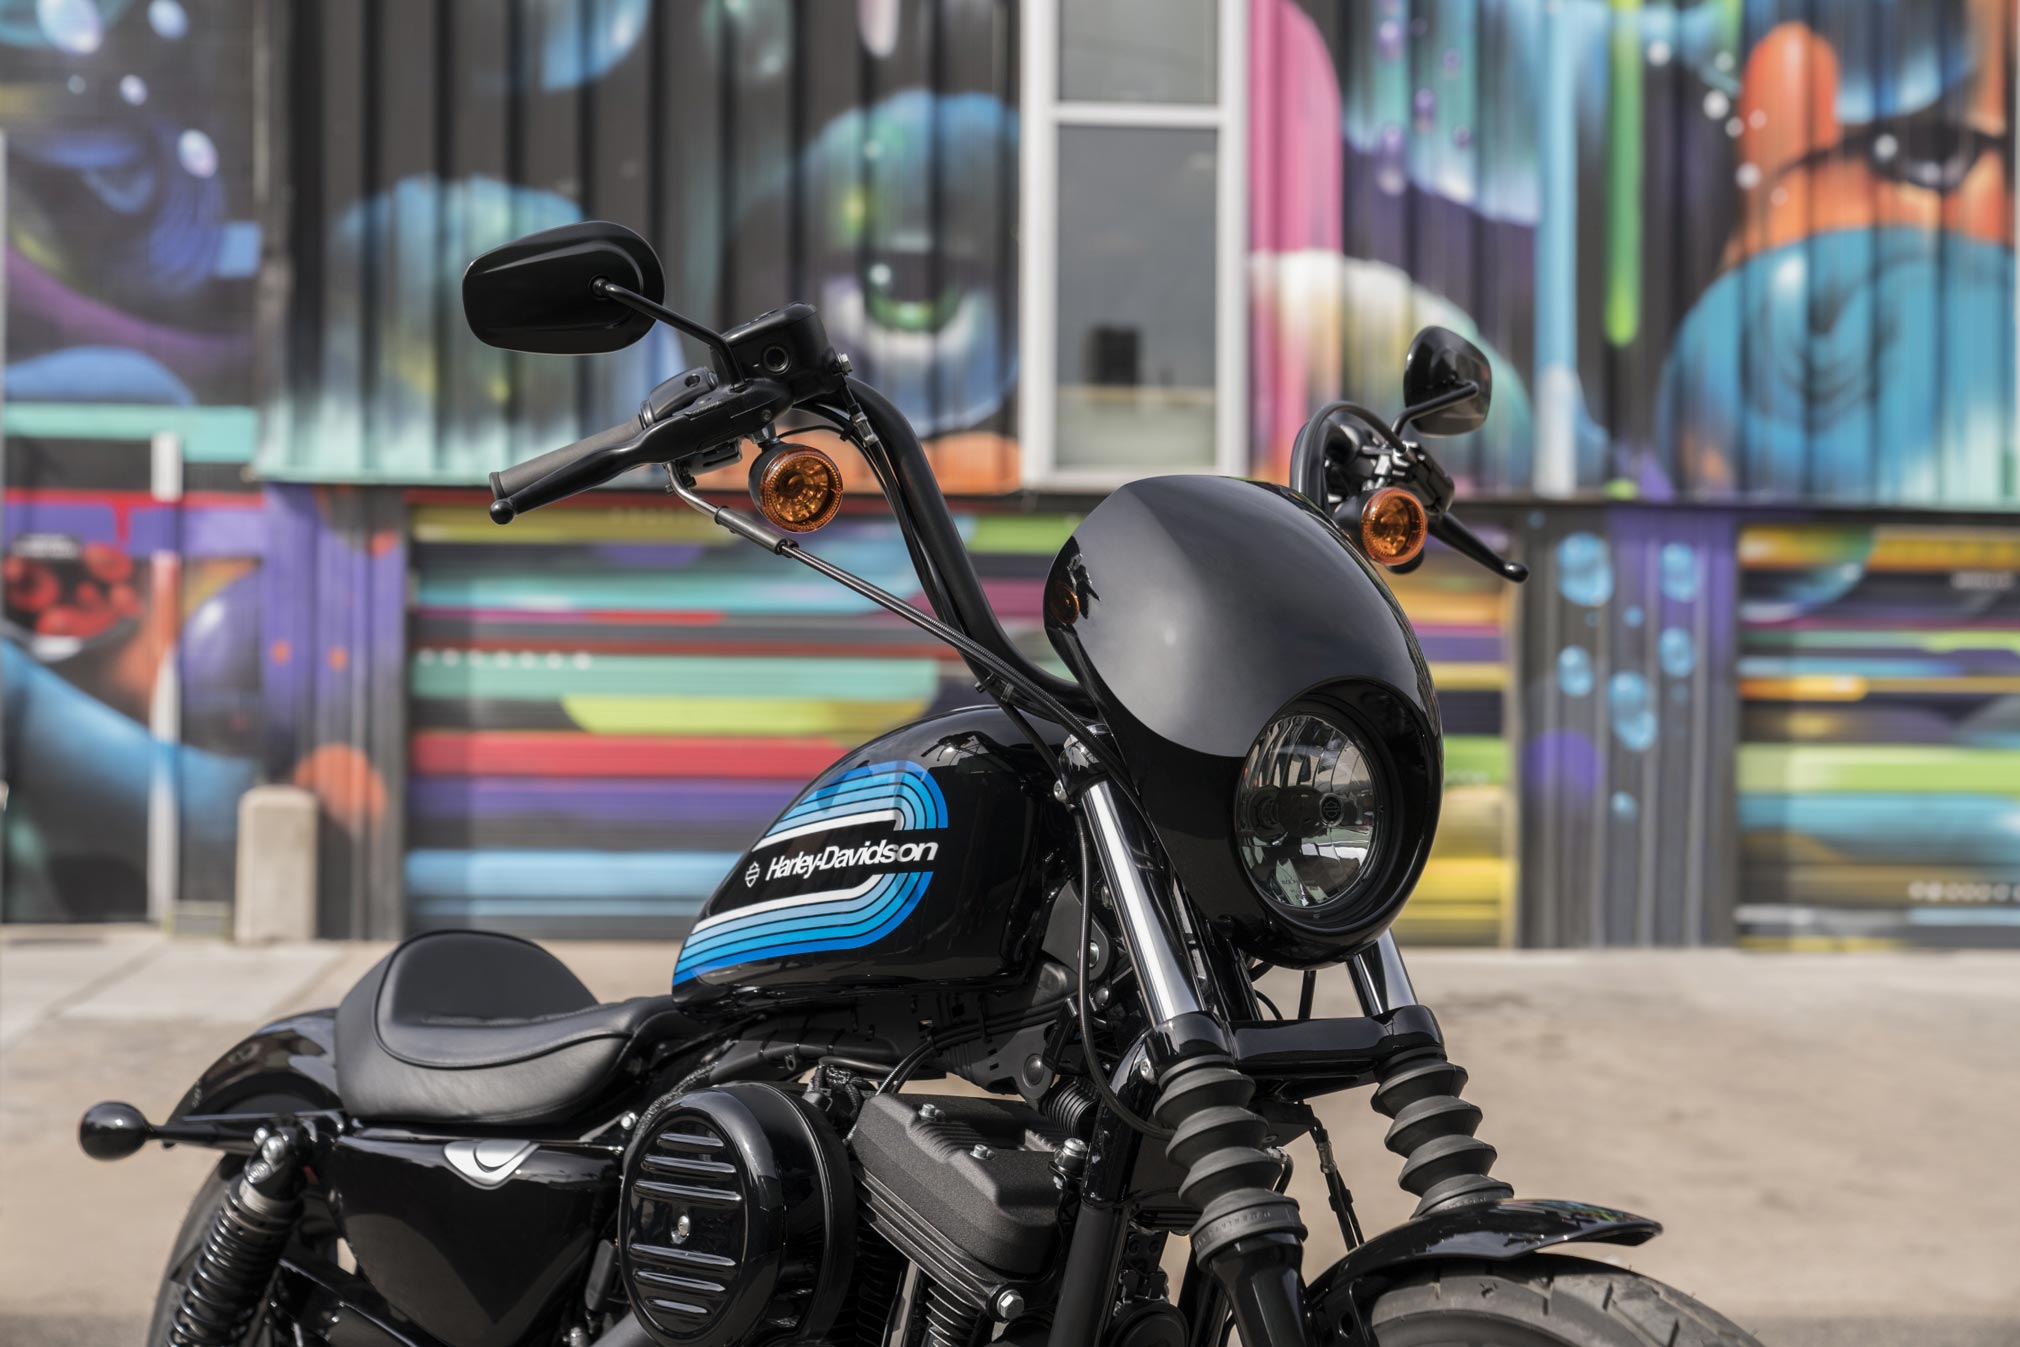 2020 Harley-Davidson Iron 1200 Guide • Total Motorcycle